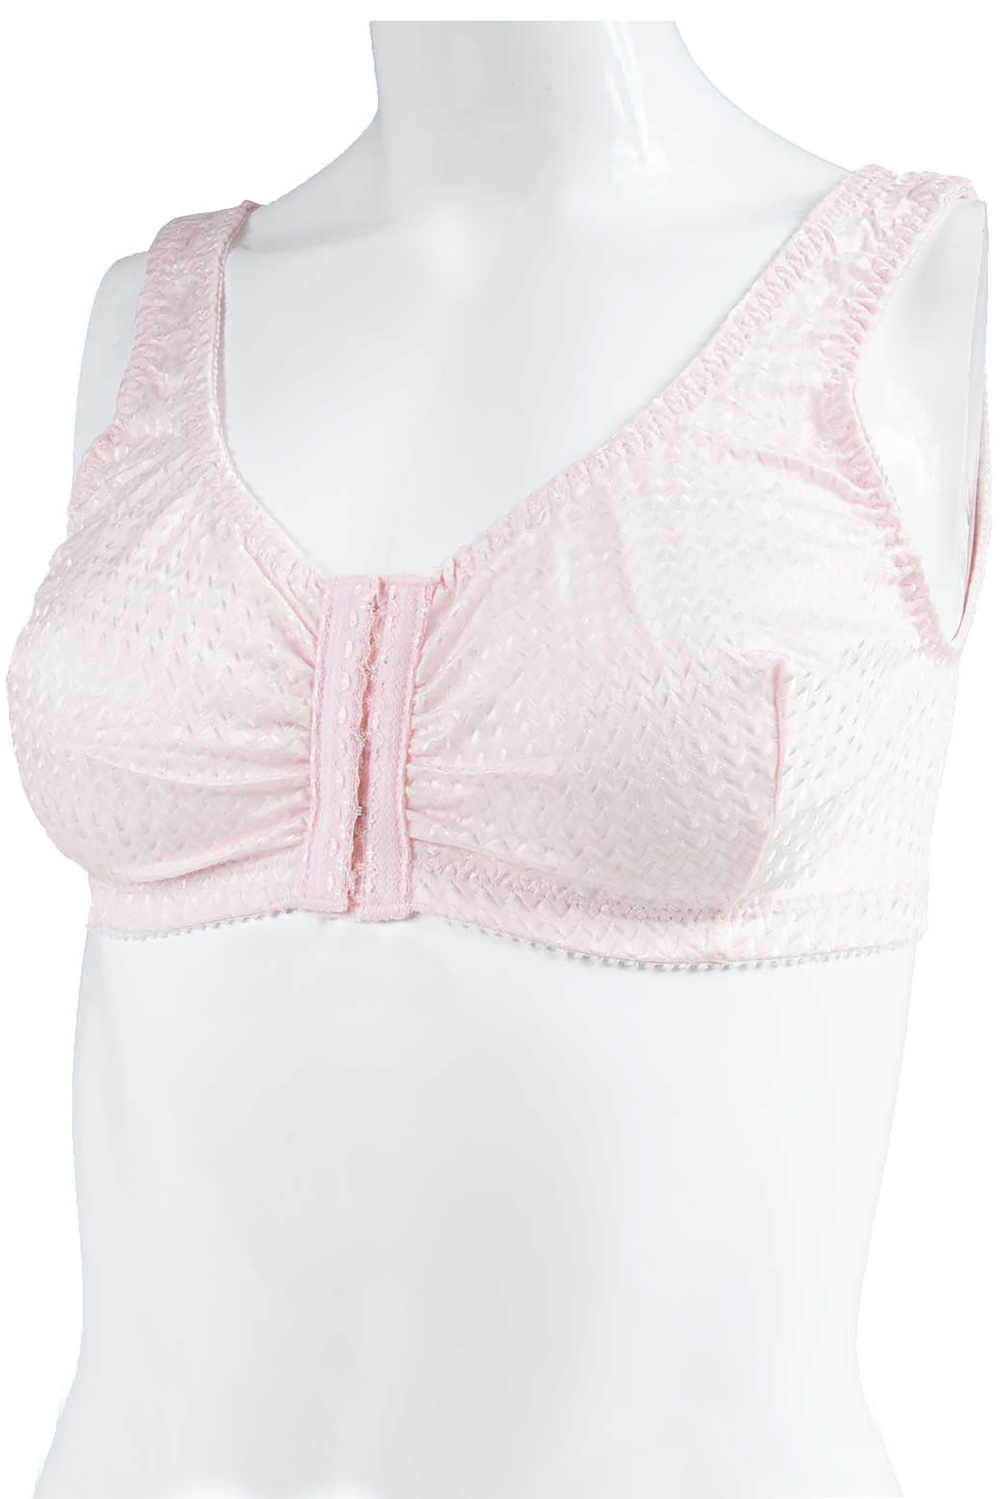 Carole Martin - The original! Full Freedom Comfort bra, pink, 36. Colour:  pink. Size: 36 b/c/d/dd